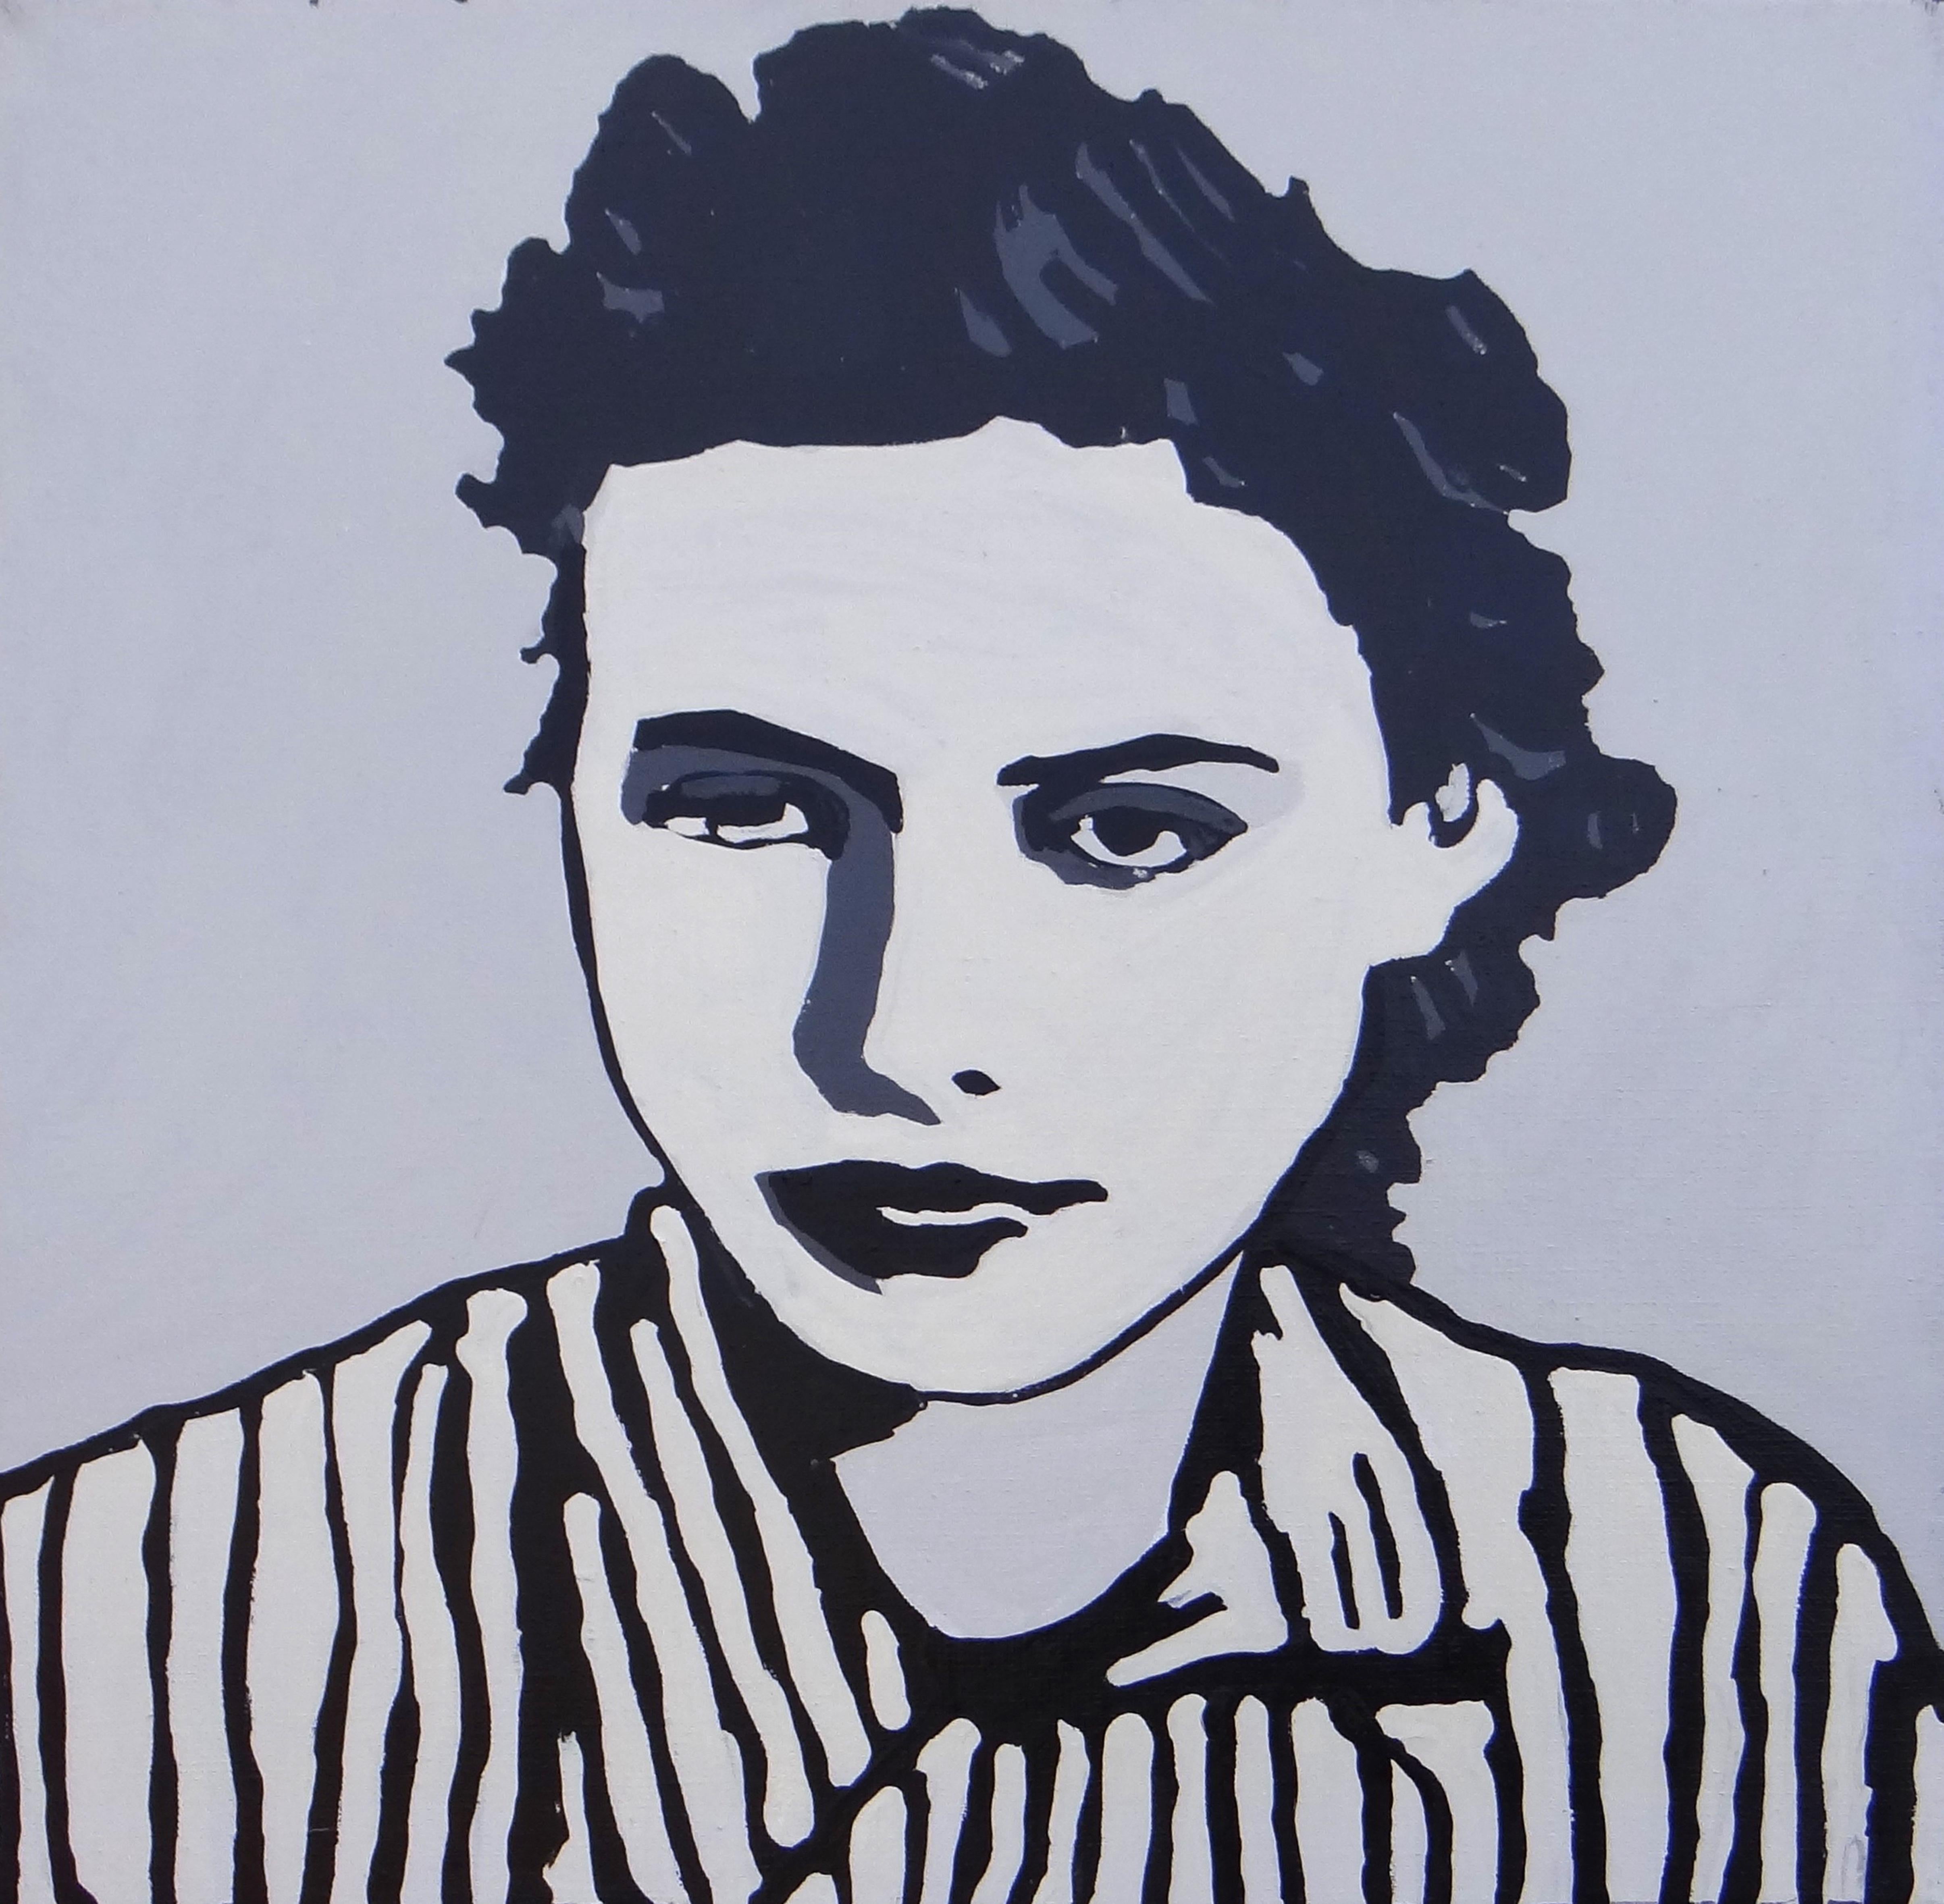 Joanna Mrozowska Portrait Painting – Anna Wajcowicz liaison Zośka - Modernes ausdrucksstarkes, symbolisches Ölporträtgemälde